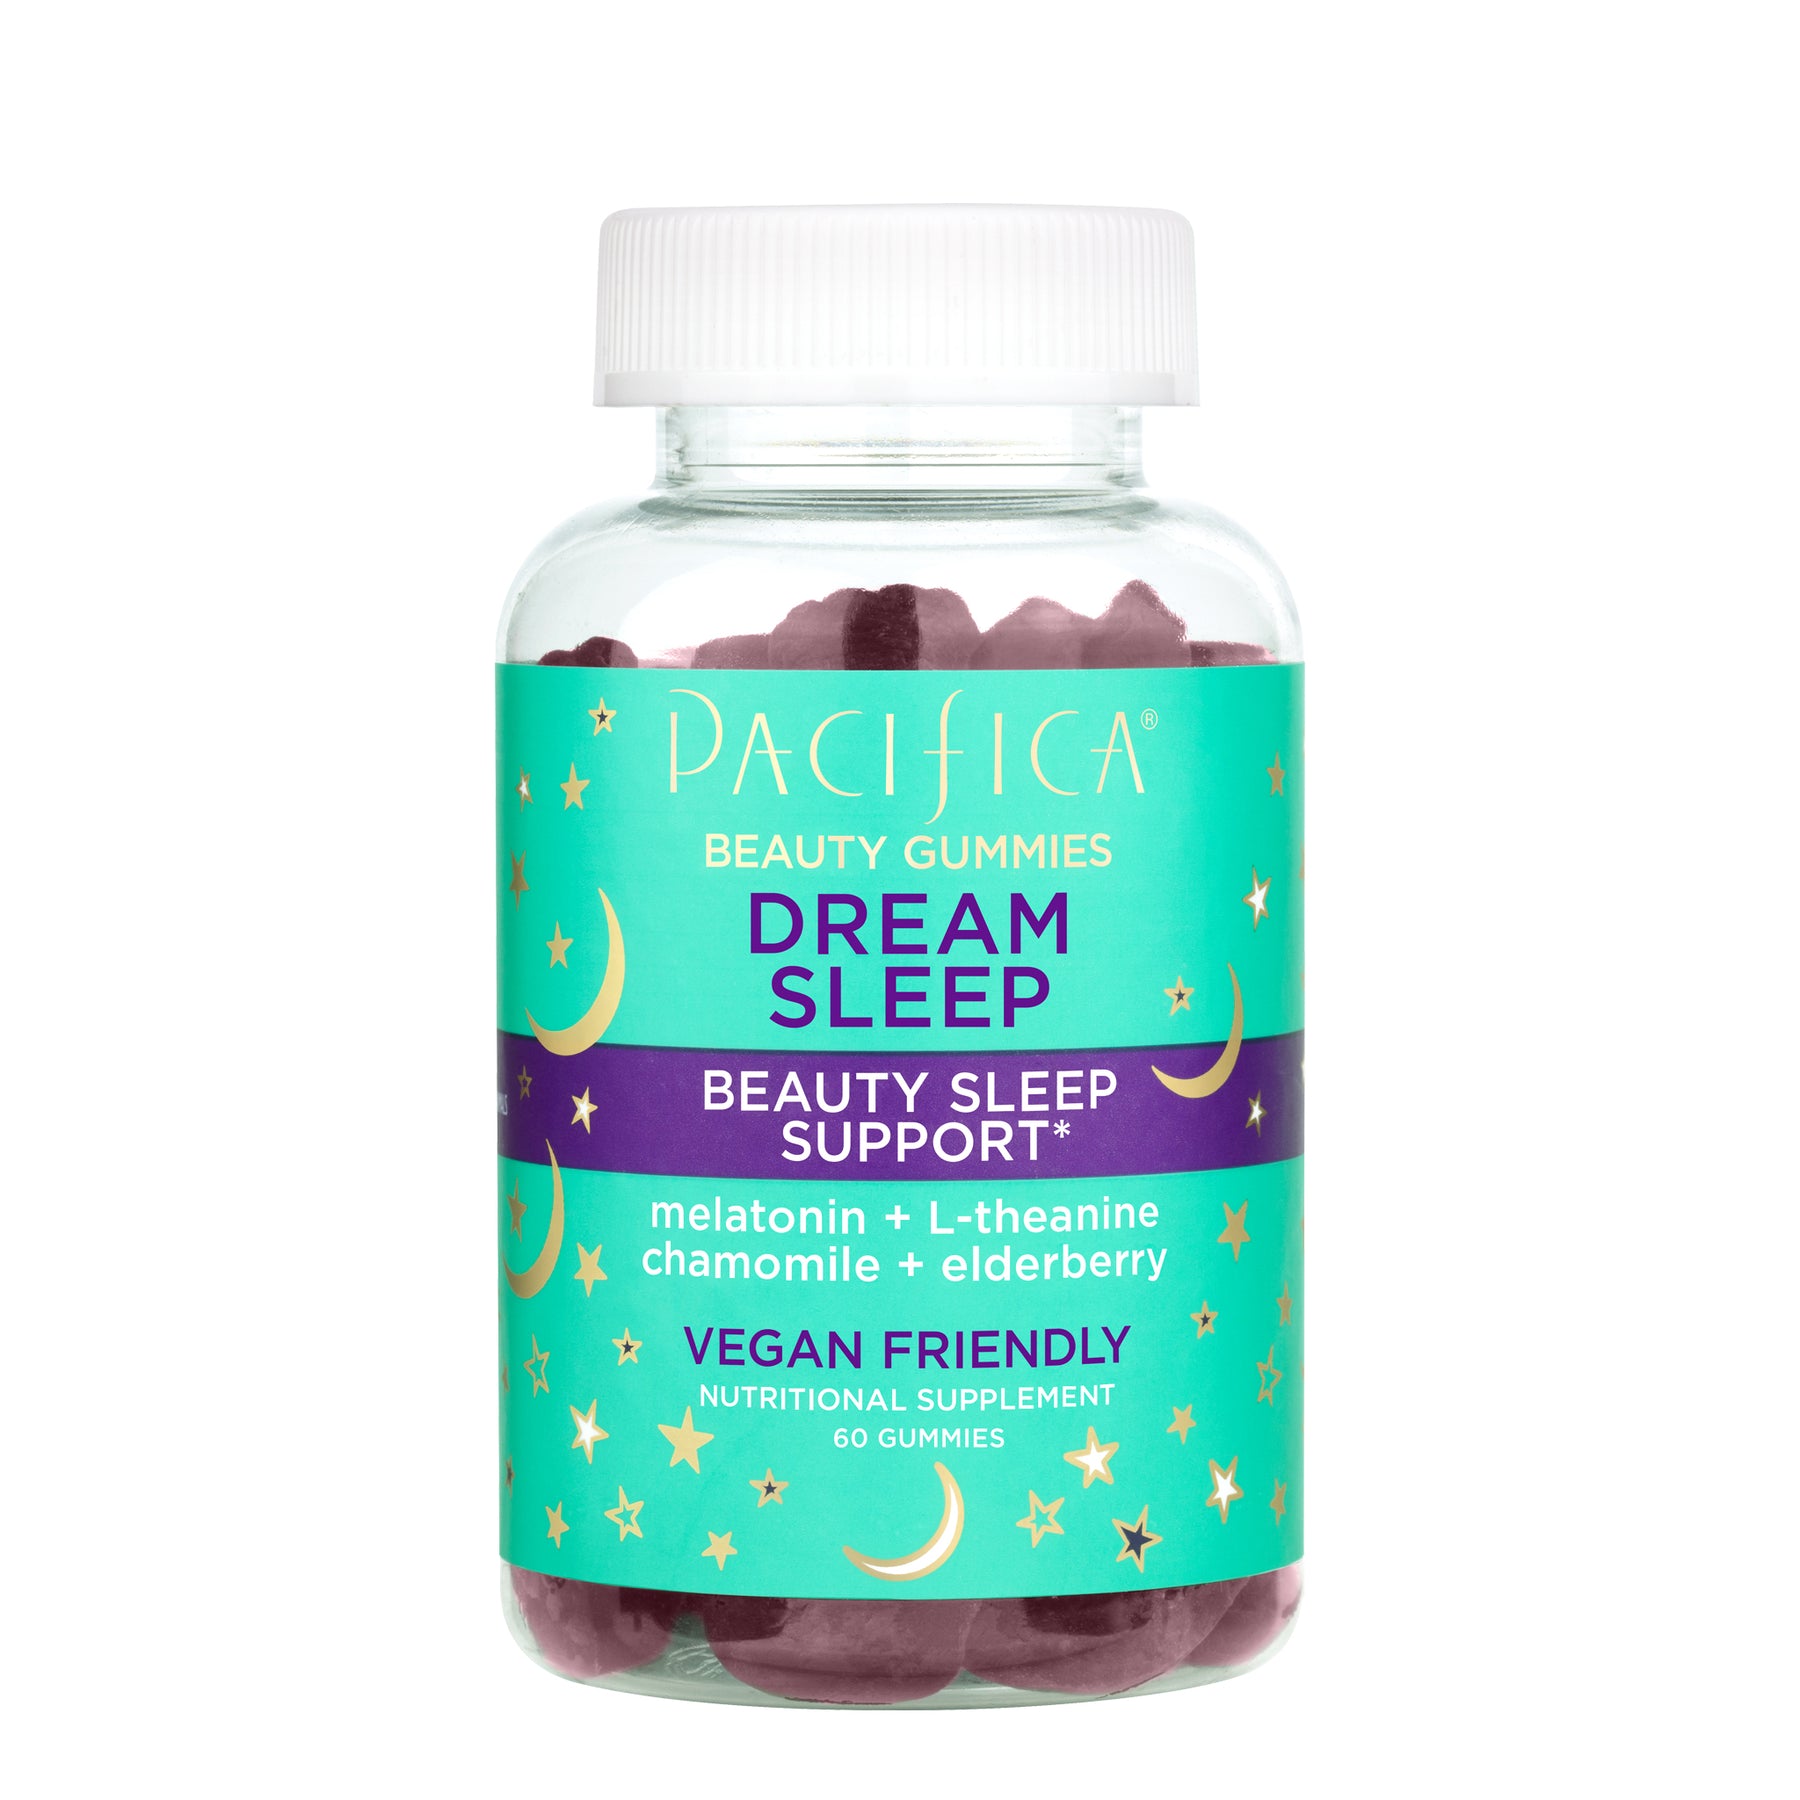 Dream Sleep Beauty Gummies - Wellness - Pacifica Beauty